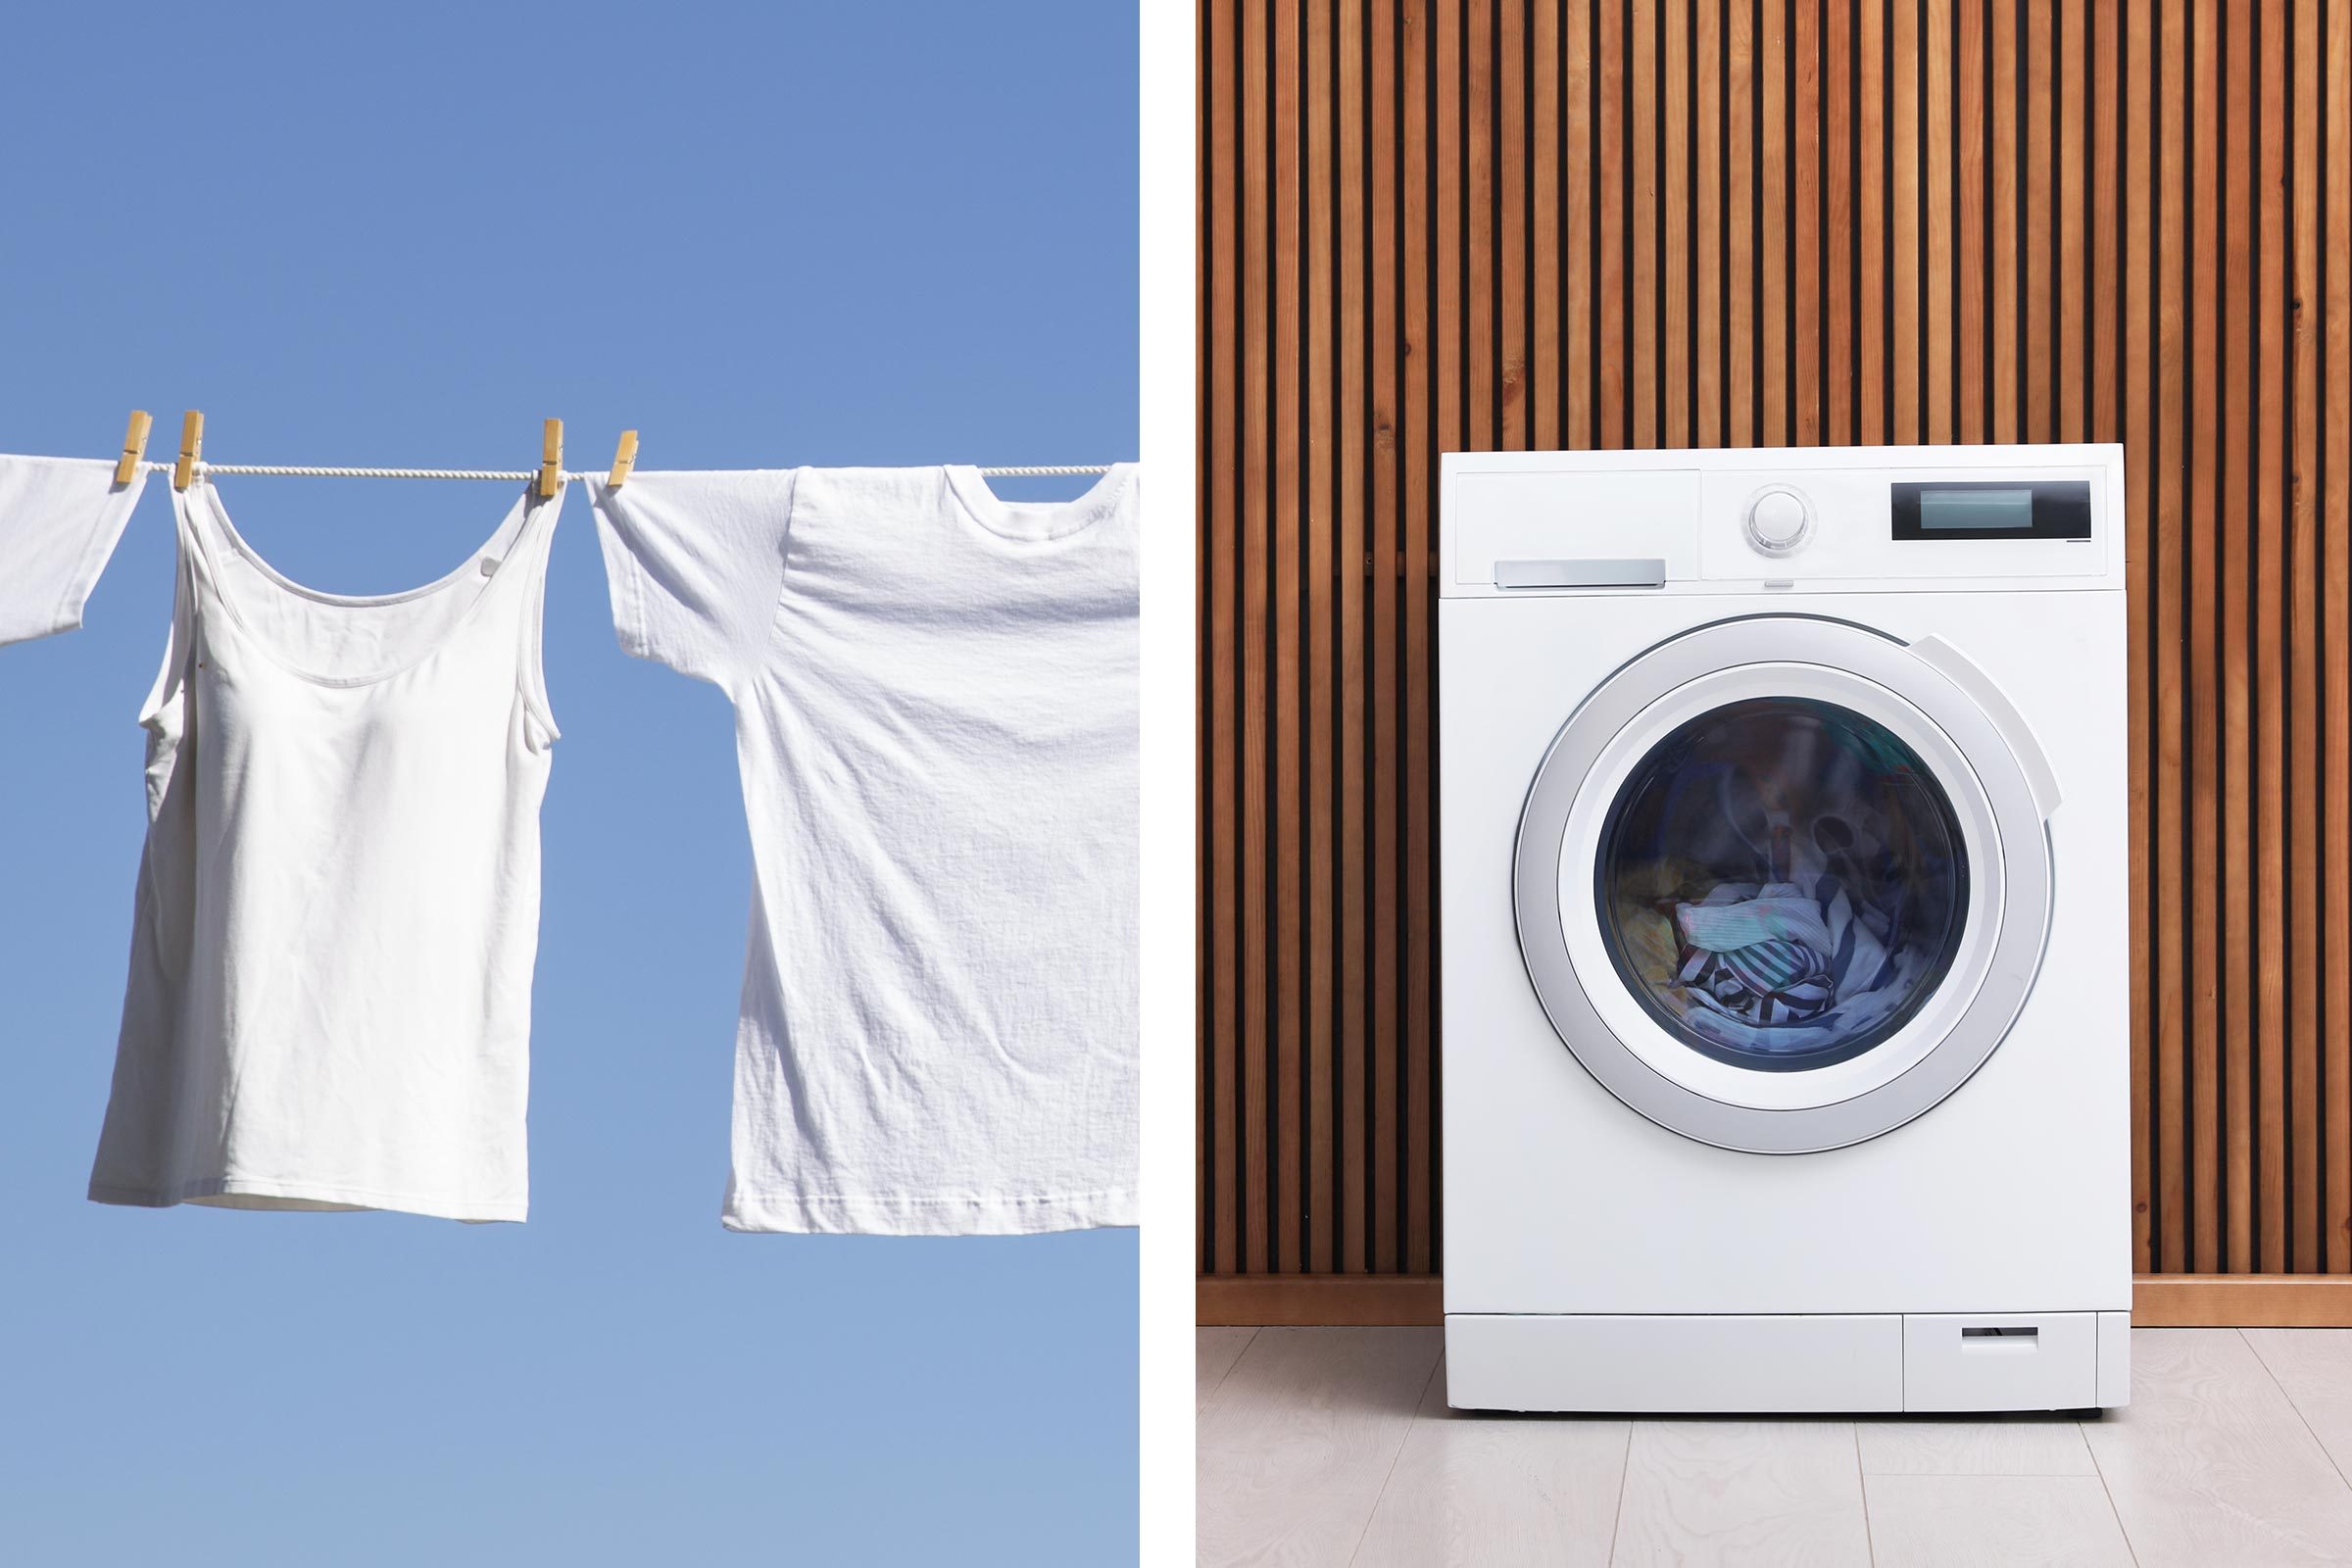 https://www.rd.com/wp-content/uploads/2019/07/laundry.jpg